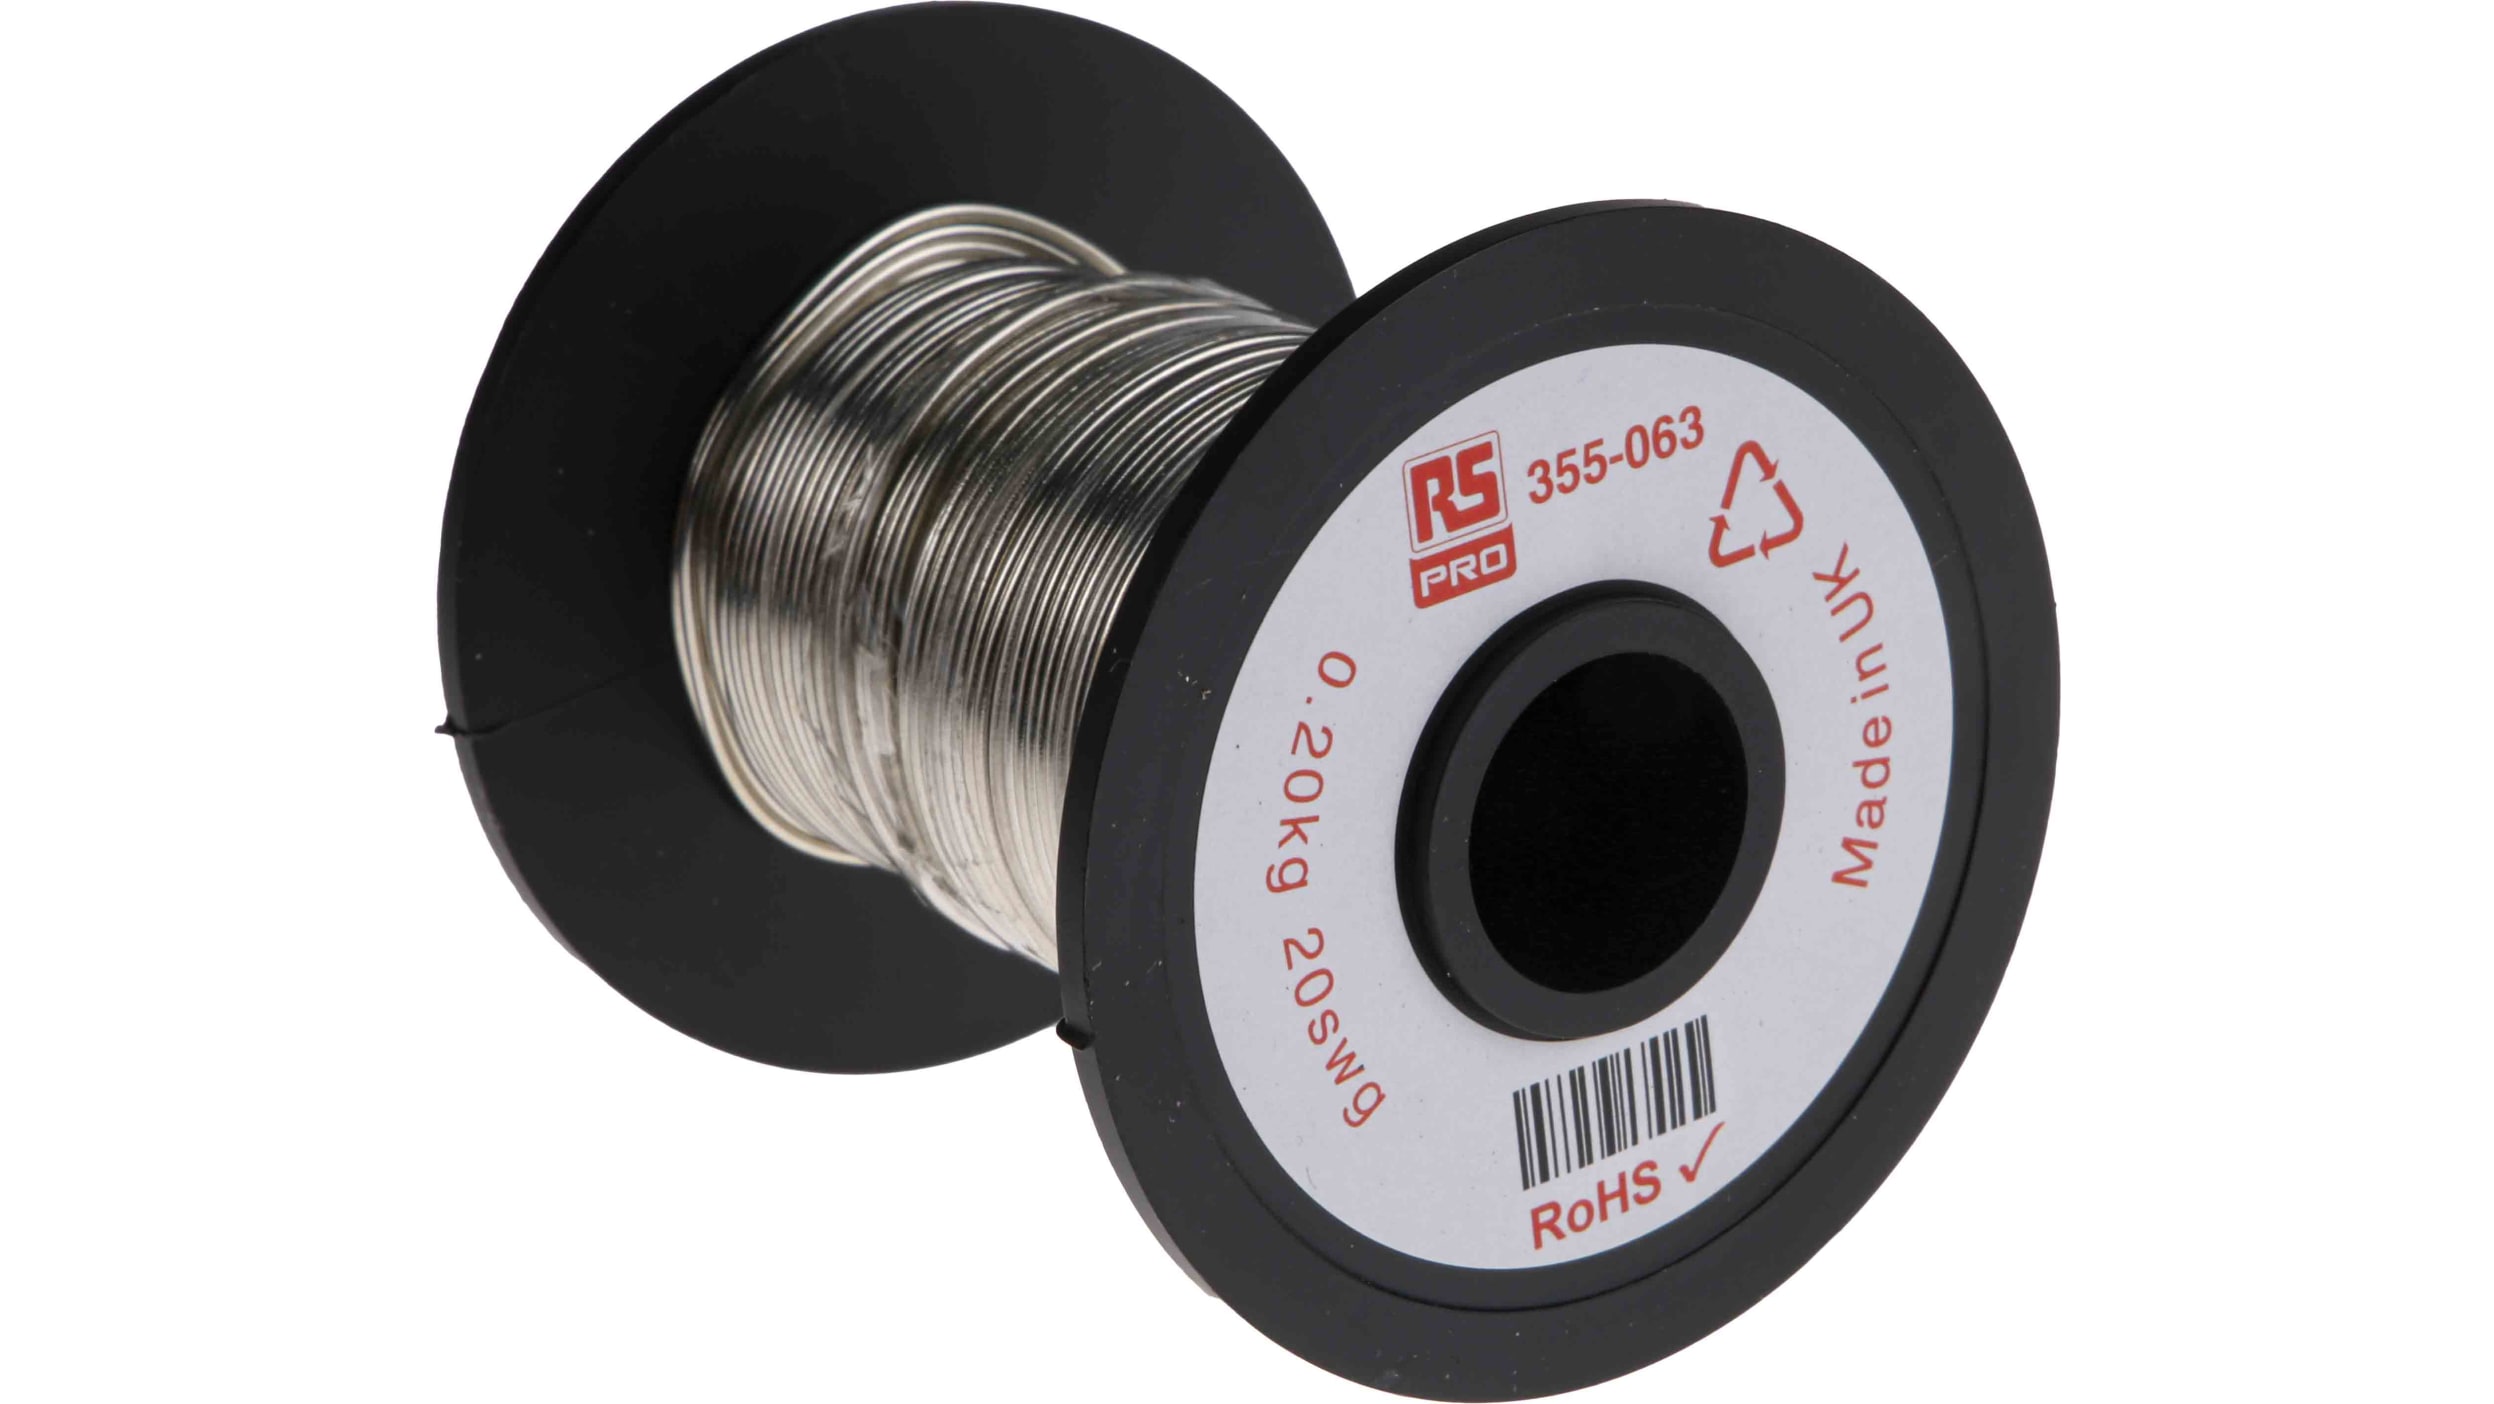 RS PRO Single Core 0.91mm diameter Copper Wire, 34.6m Long